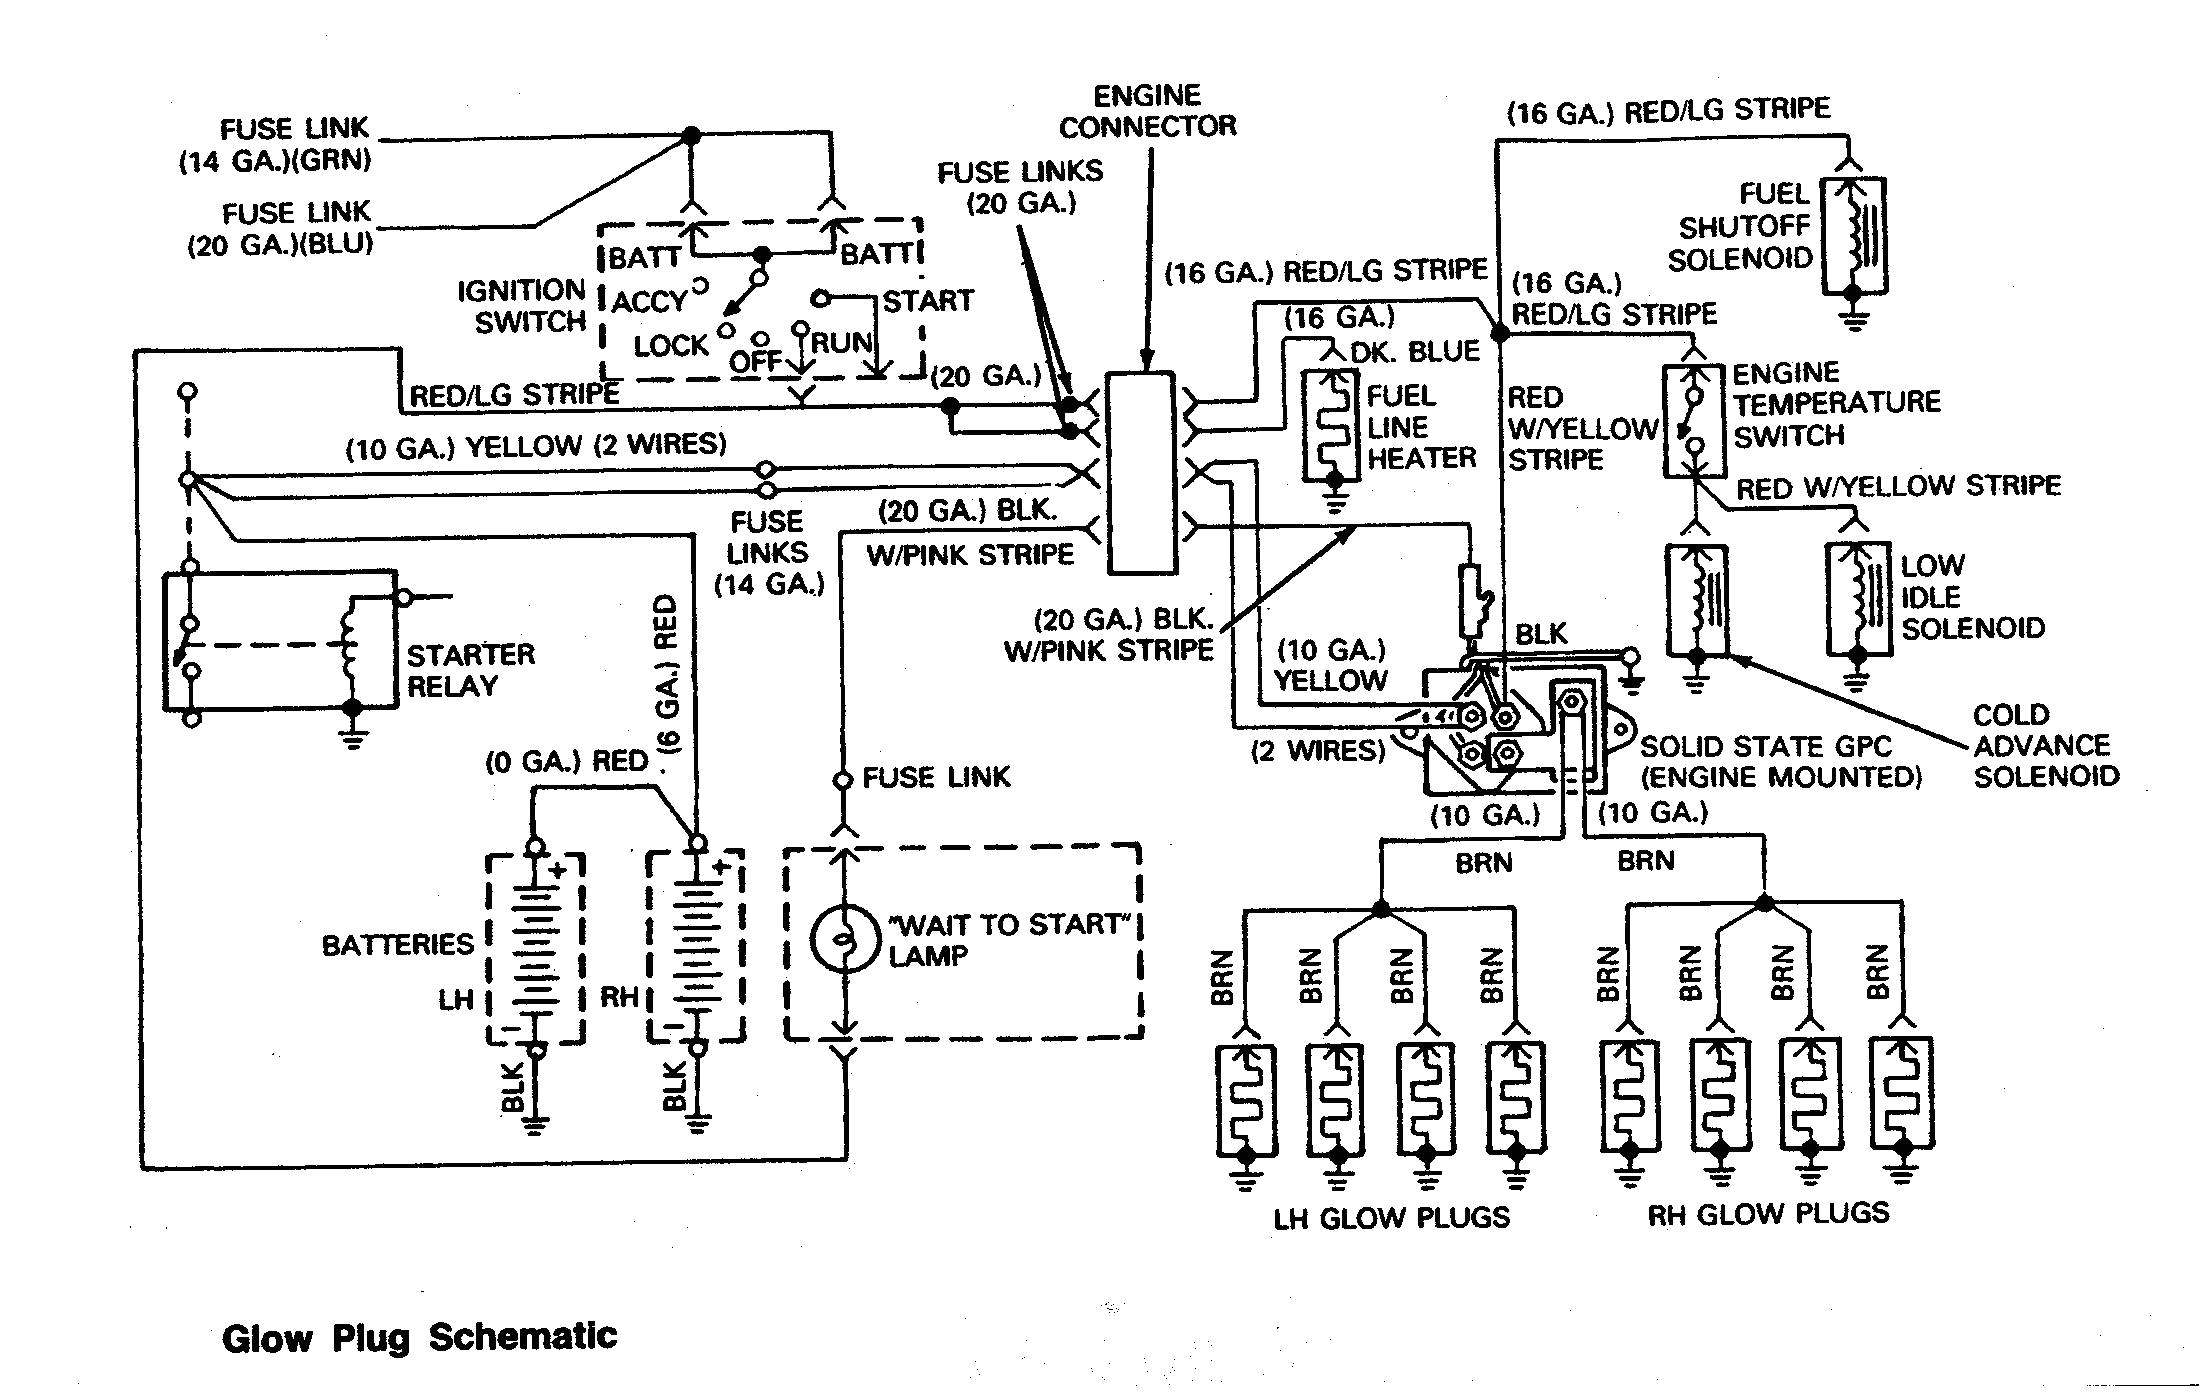 1985 mercedes glow plug wiring diagram wiring diagram operations iring diagram comple glow plug bcma 1985